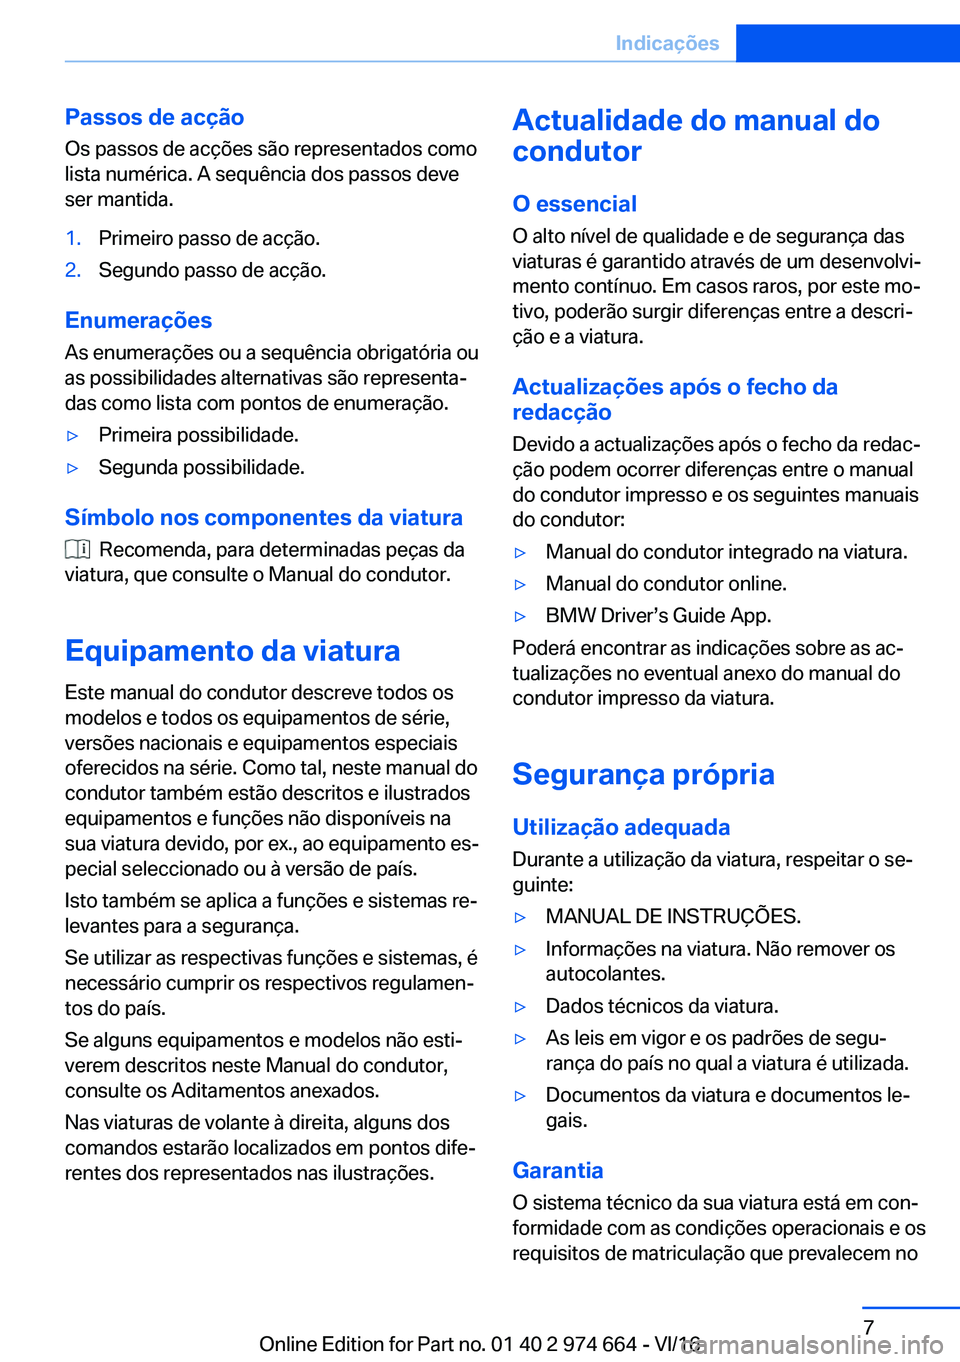 BMW M2 2017  Manual do condutor (in Portuguese) �P�a�s�s�o�s��d�e��a�c�